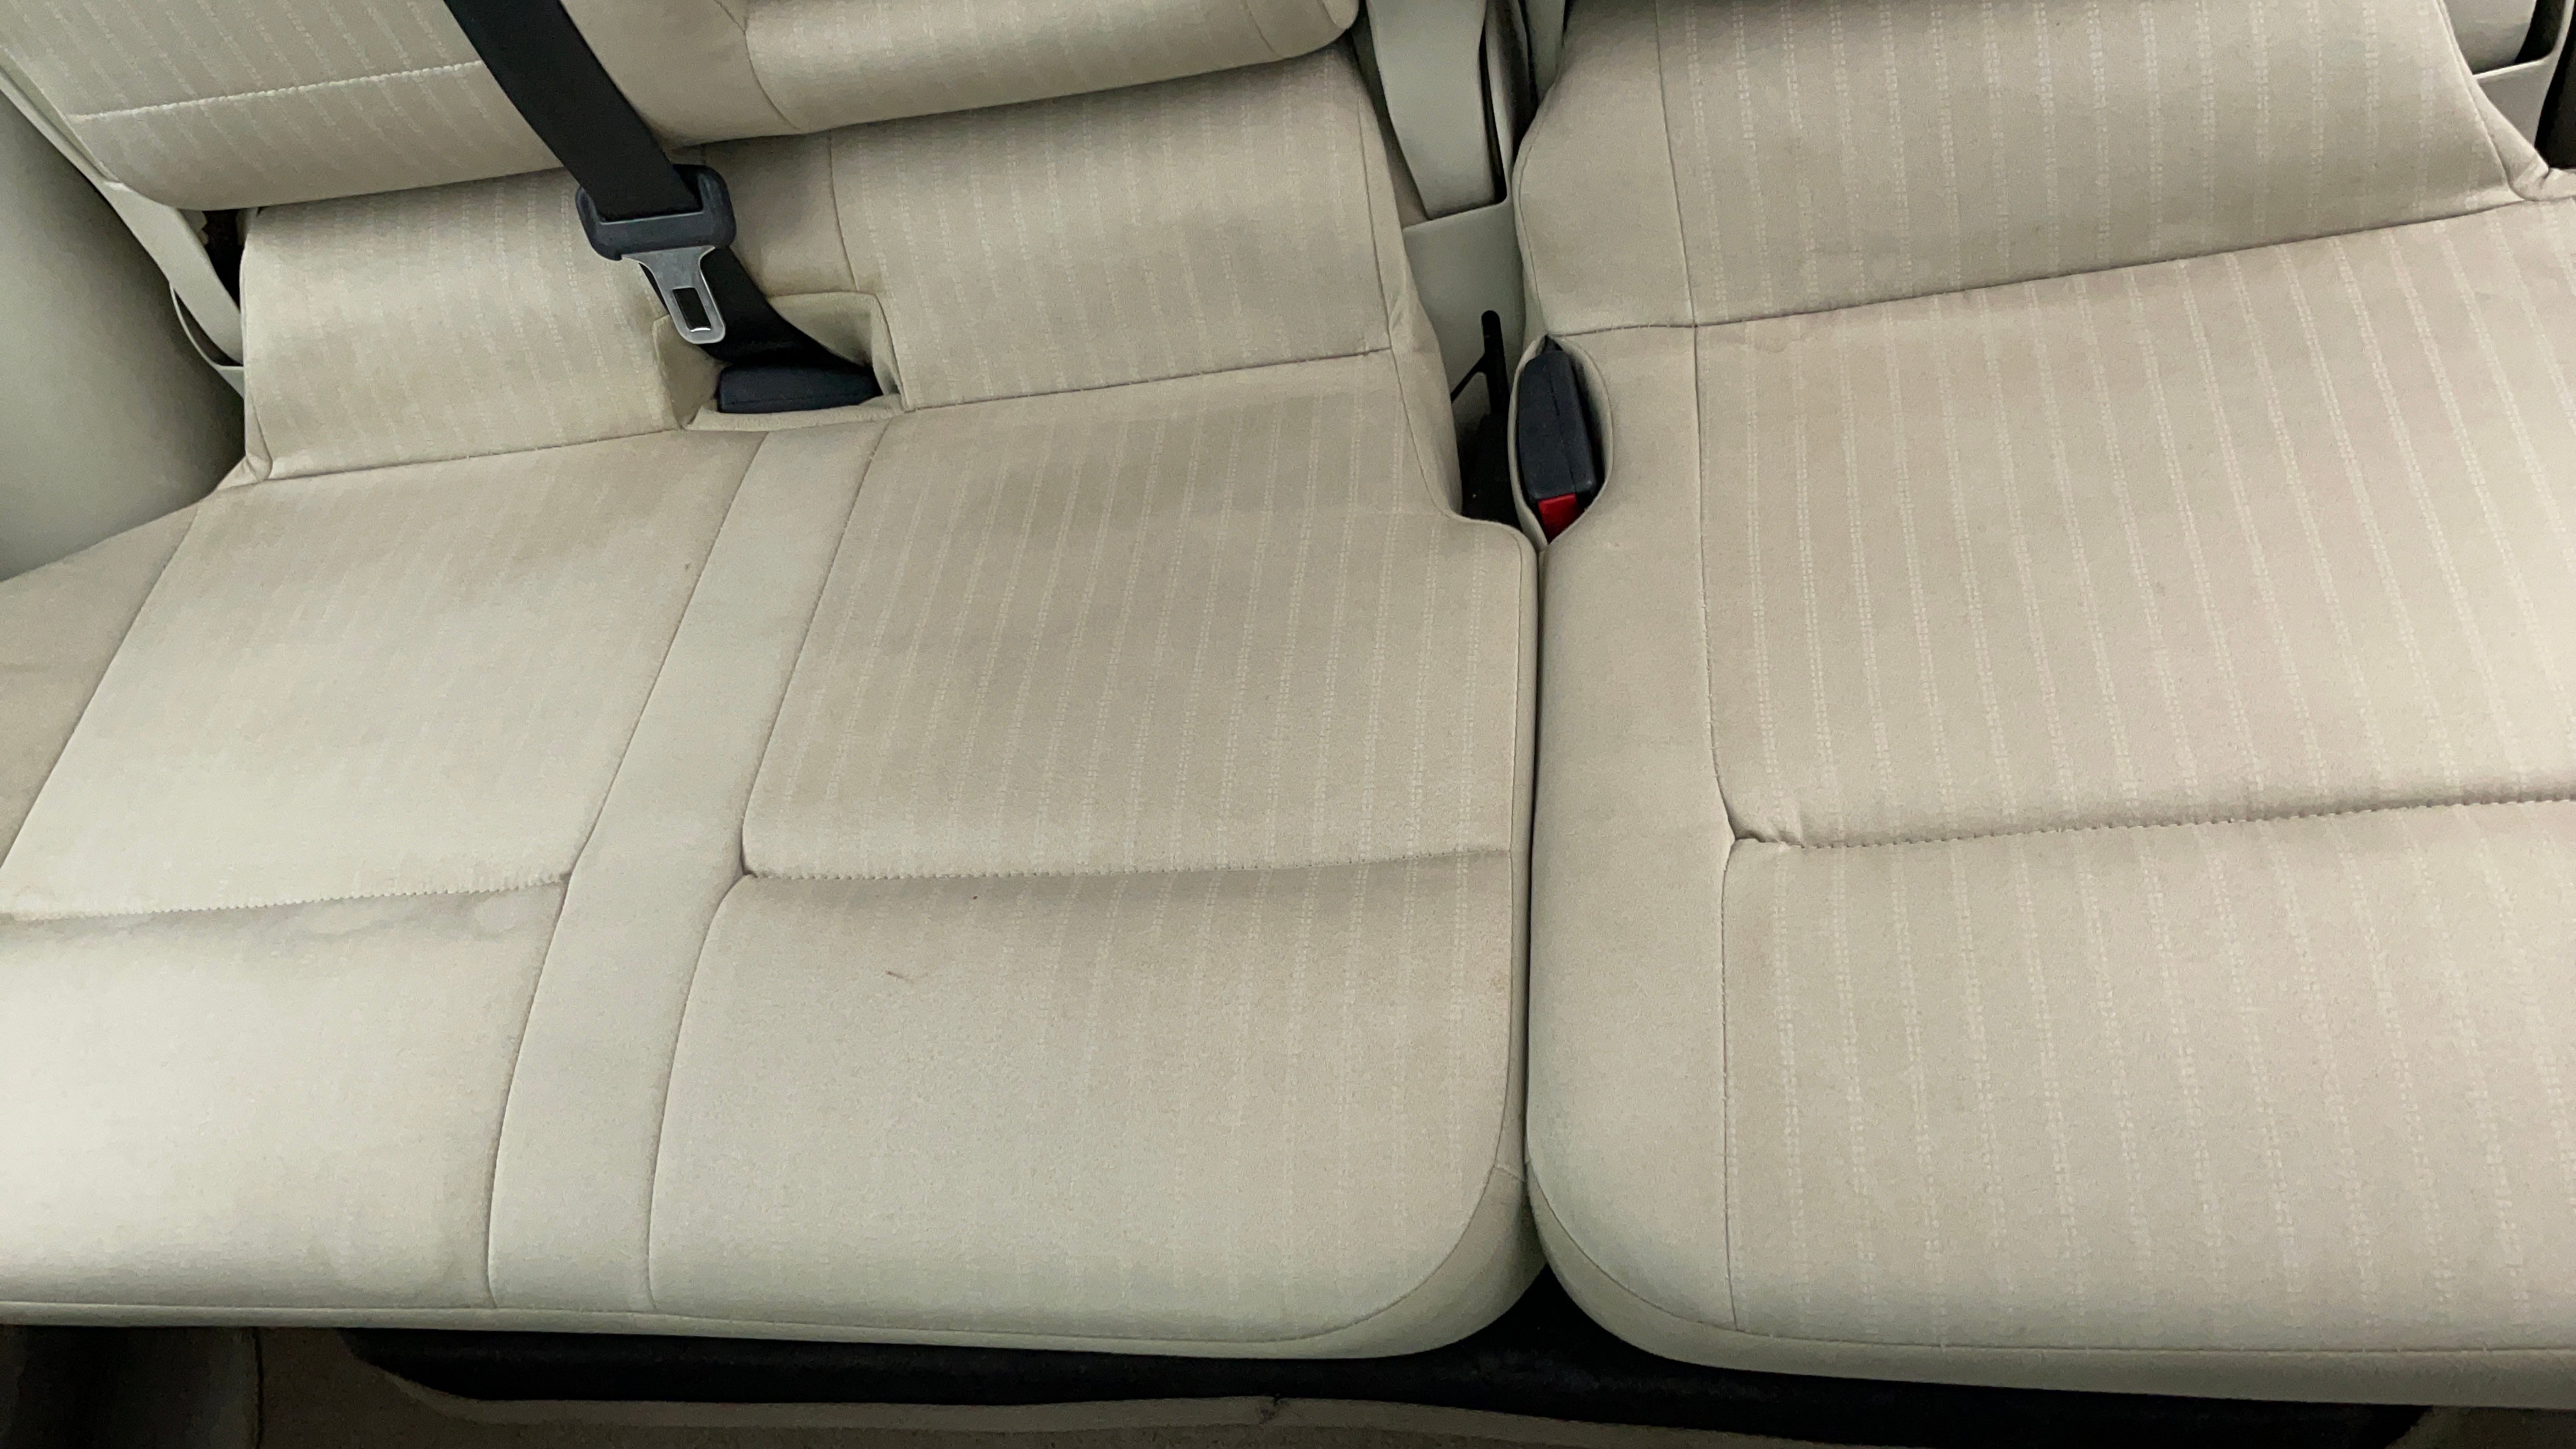 Mitsubishi Pajero-Seat 2nd row RHS  Dirty